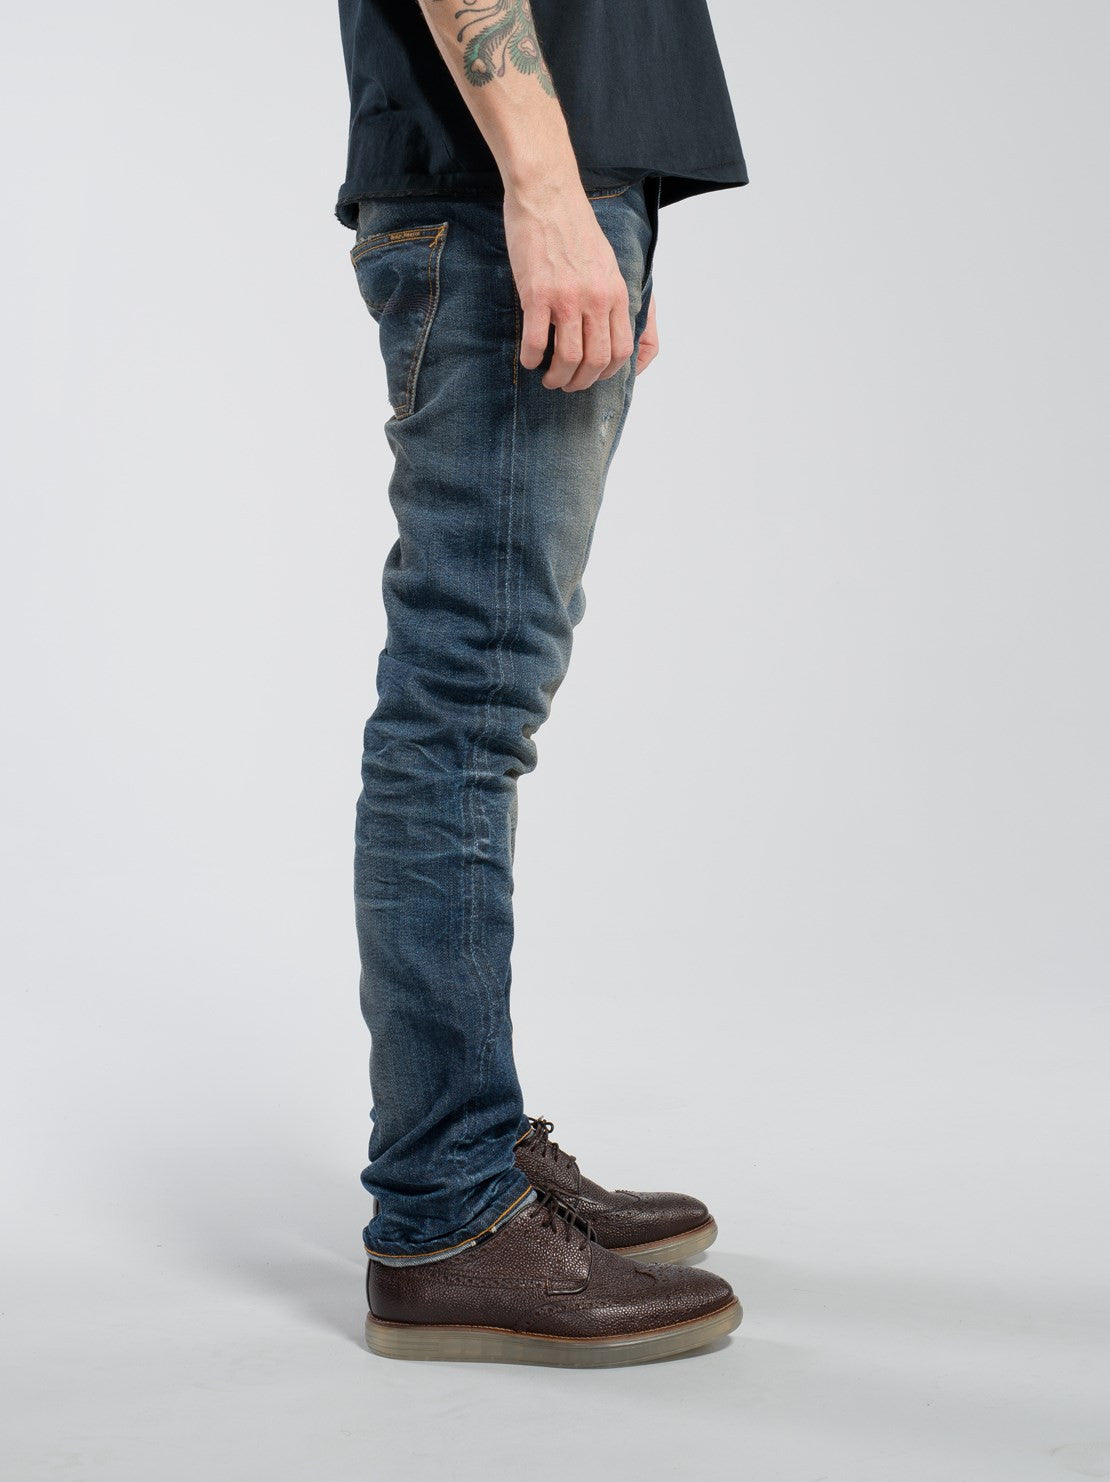 Nudie Jeans Thin Finn Jonas Replica - Mildblend Supply Co